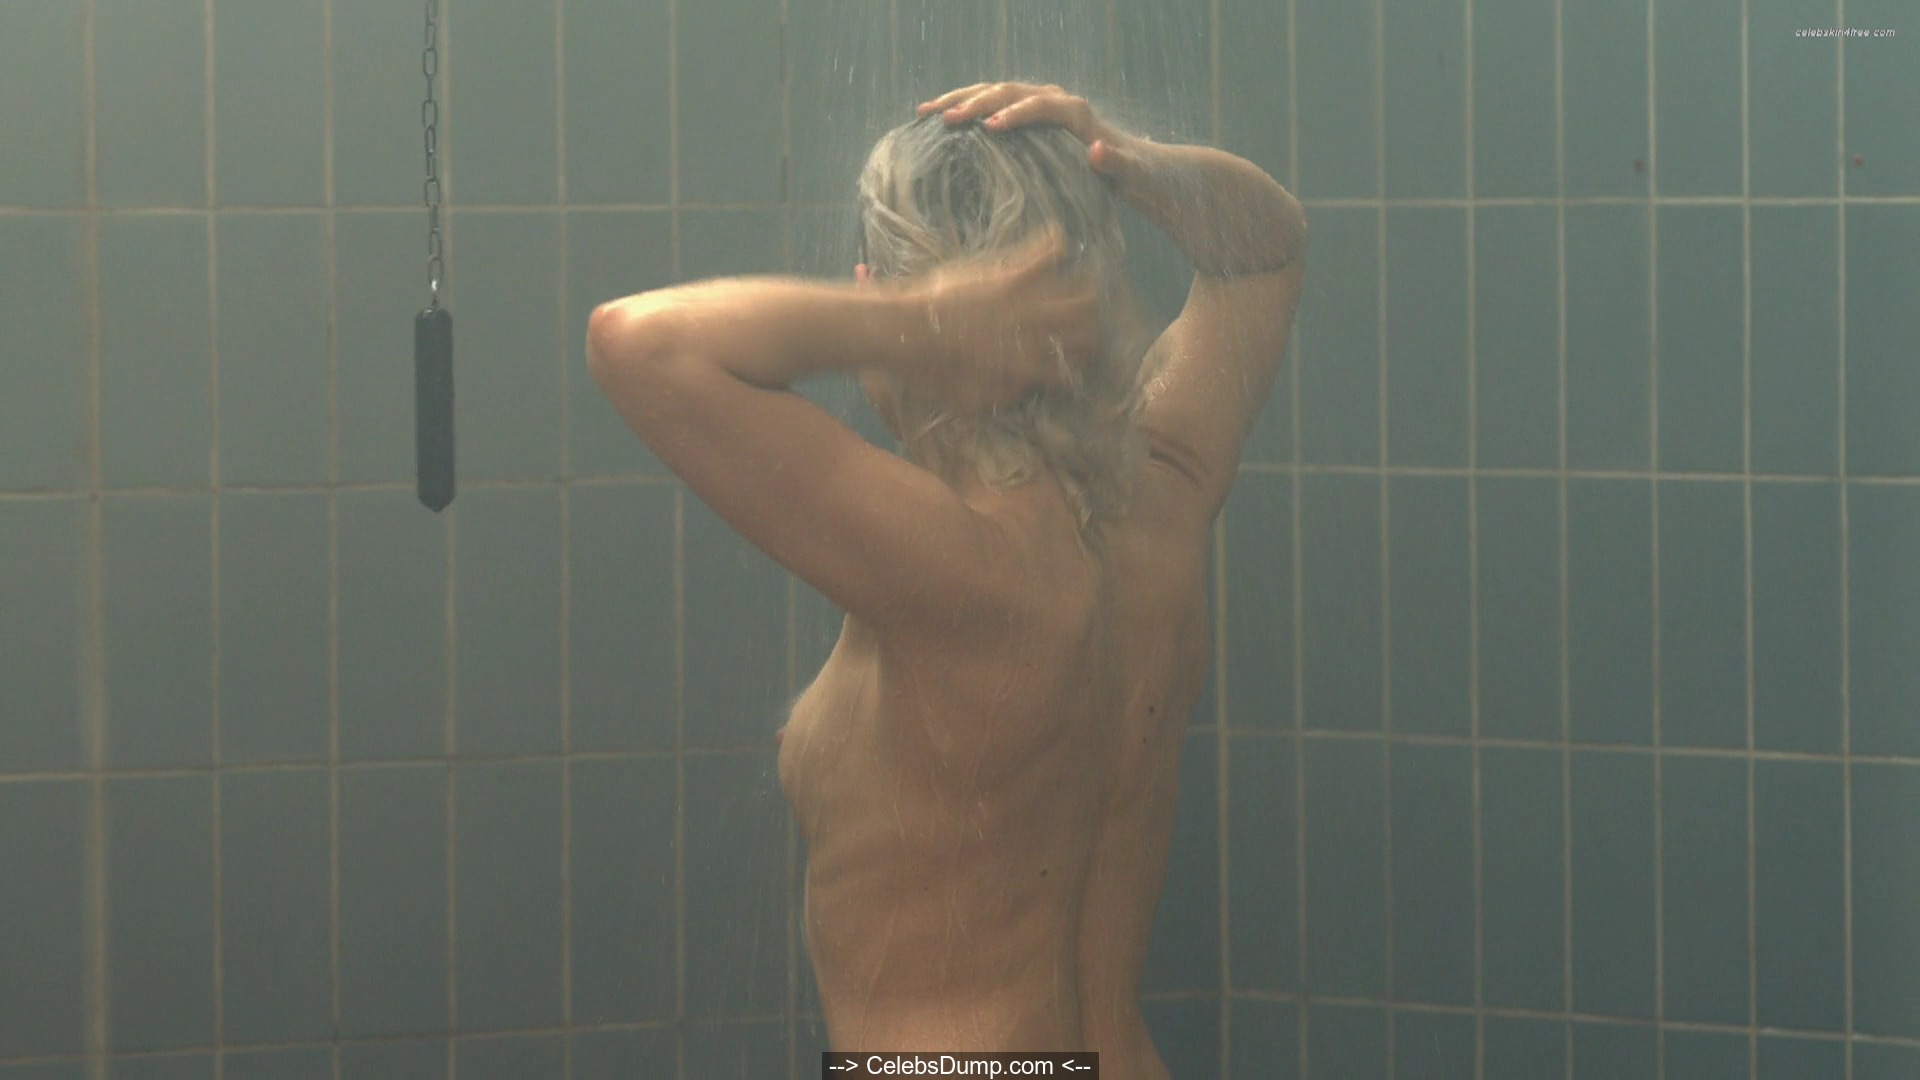 Veerle Baetens nude under shower vidcaps.